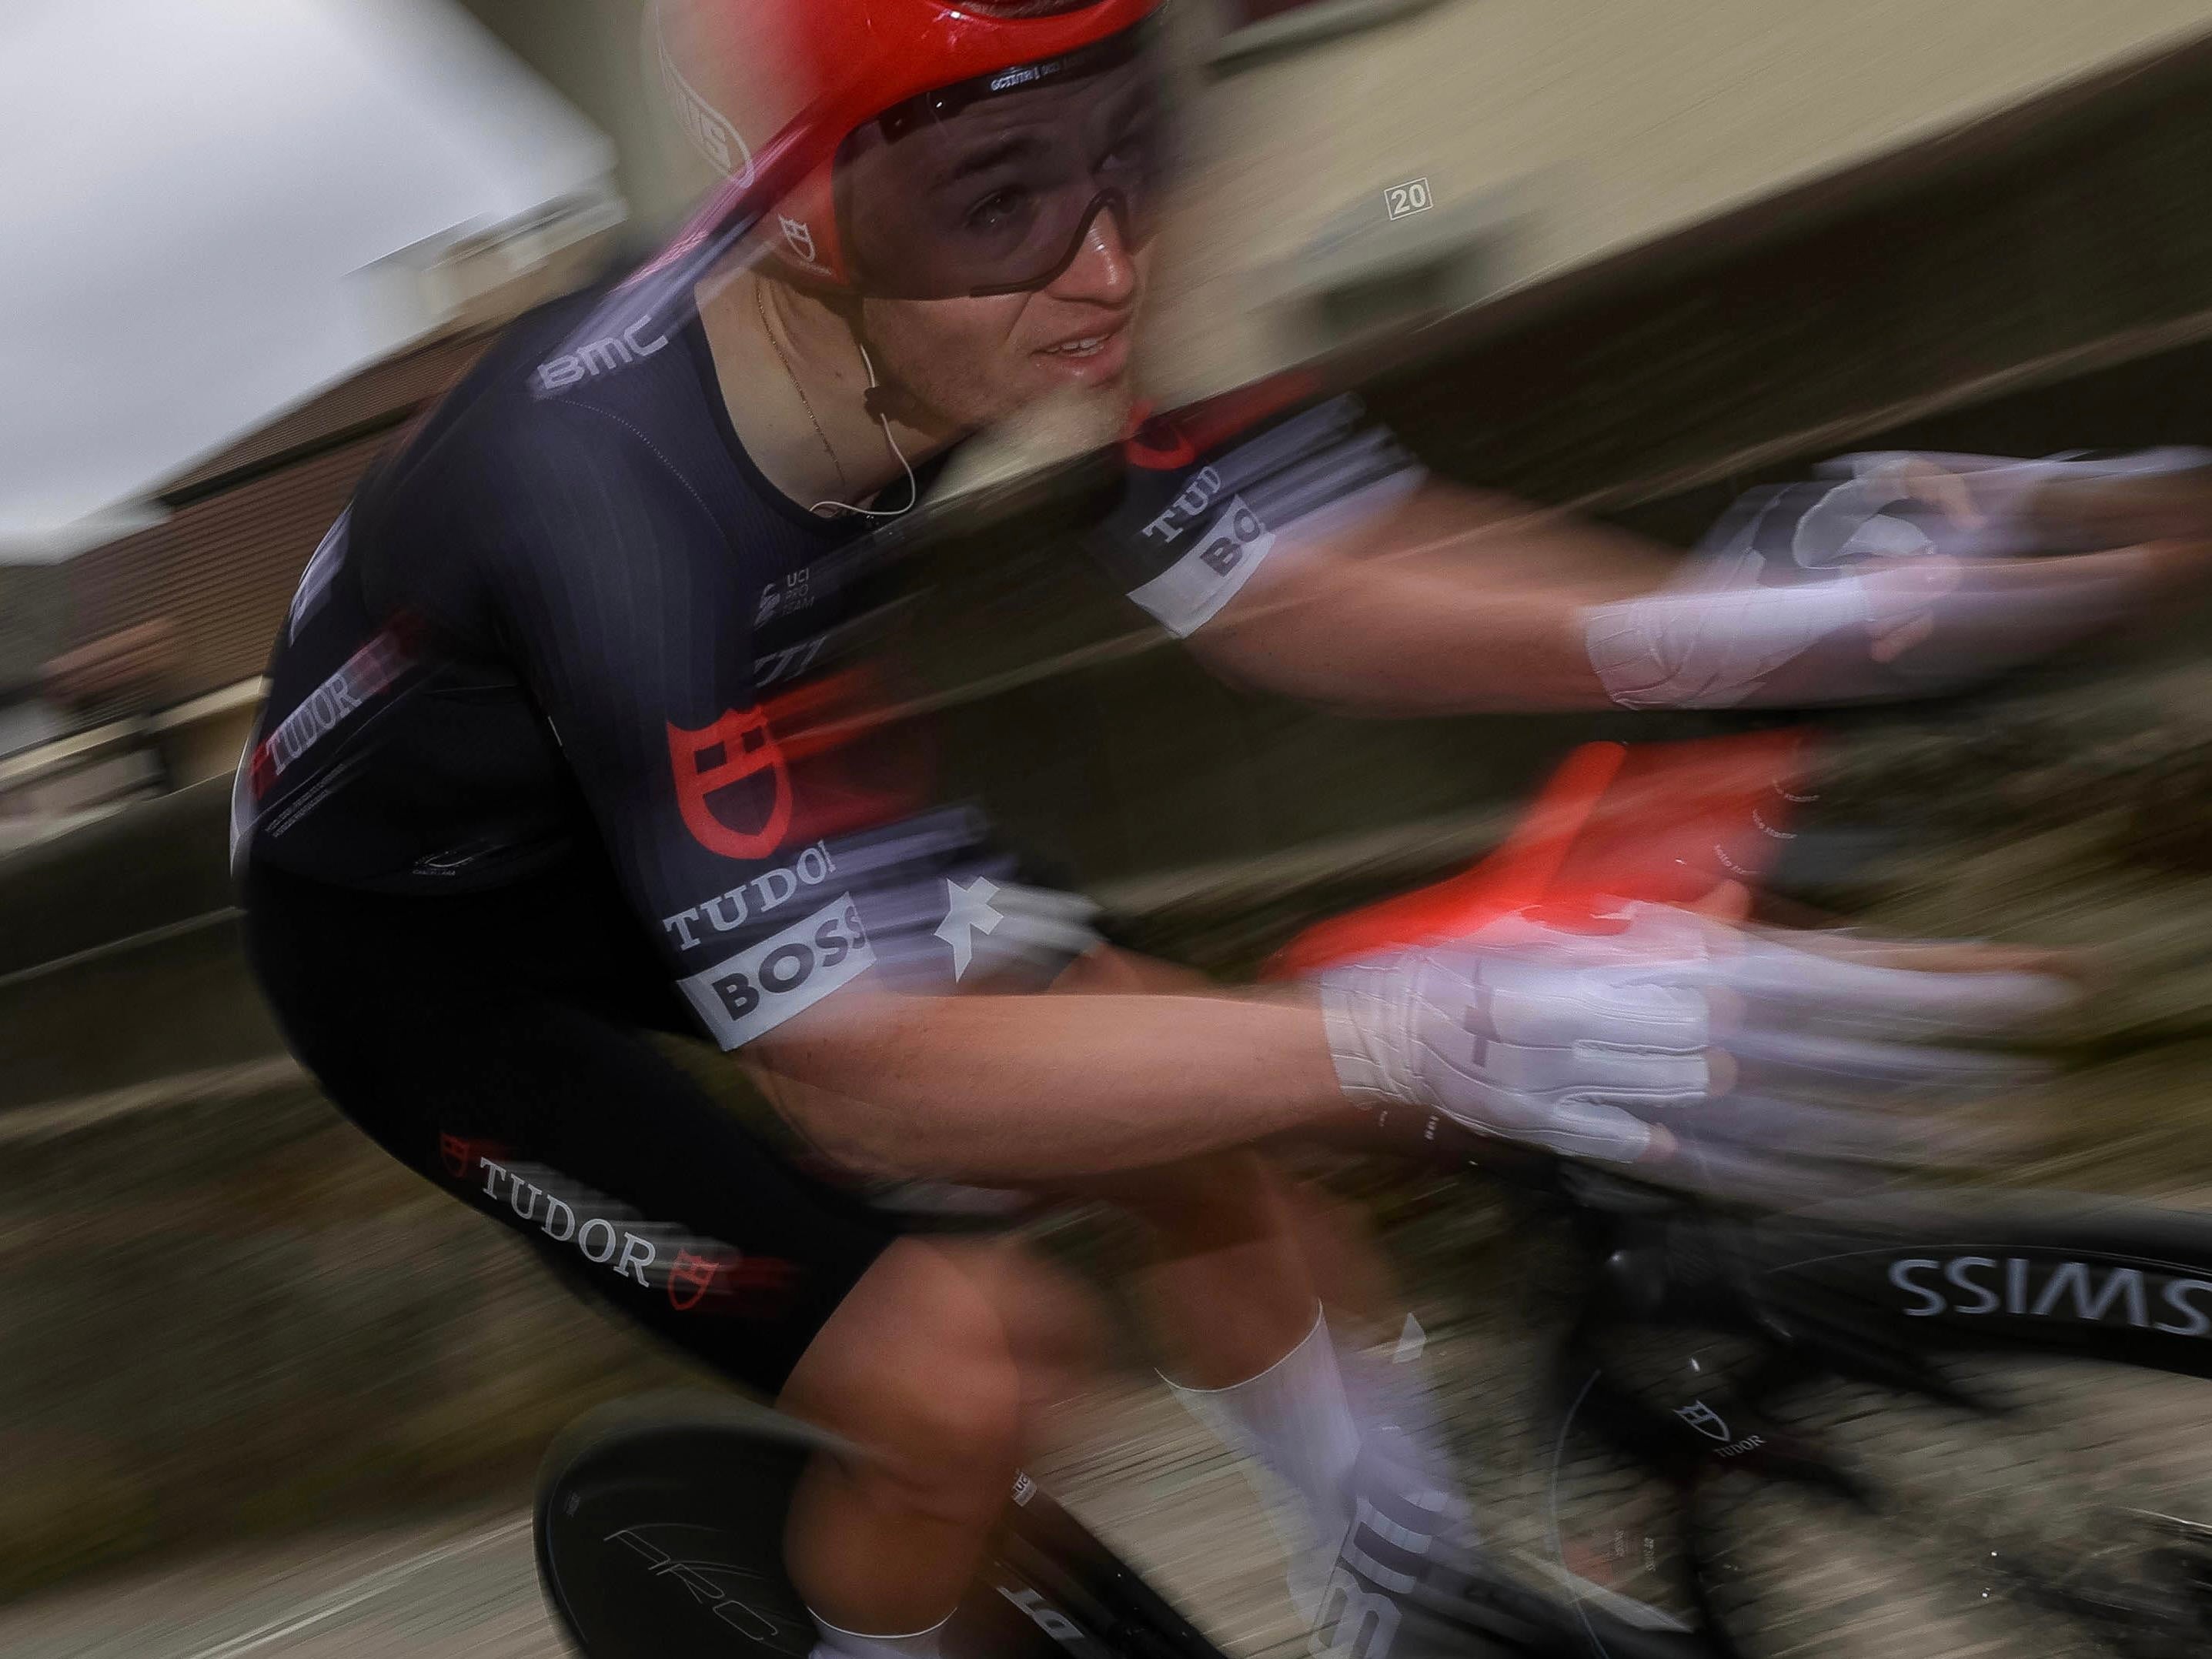 BMC | Tudor Pro Cycling's Zijlaard wins prologue Tour de Romandie in Cancellara's backyard